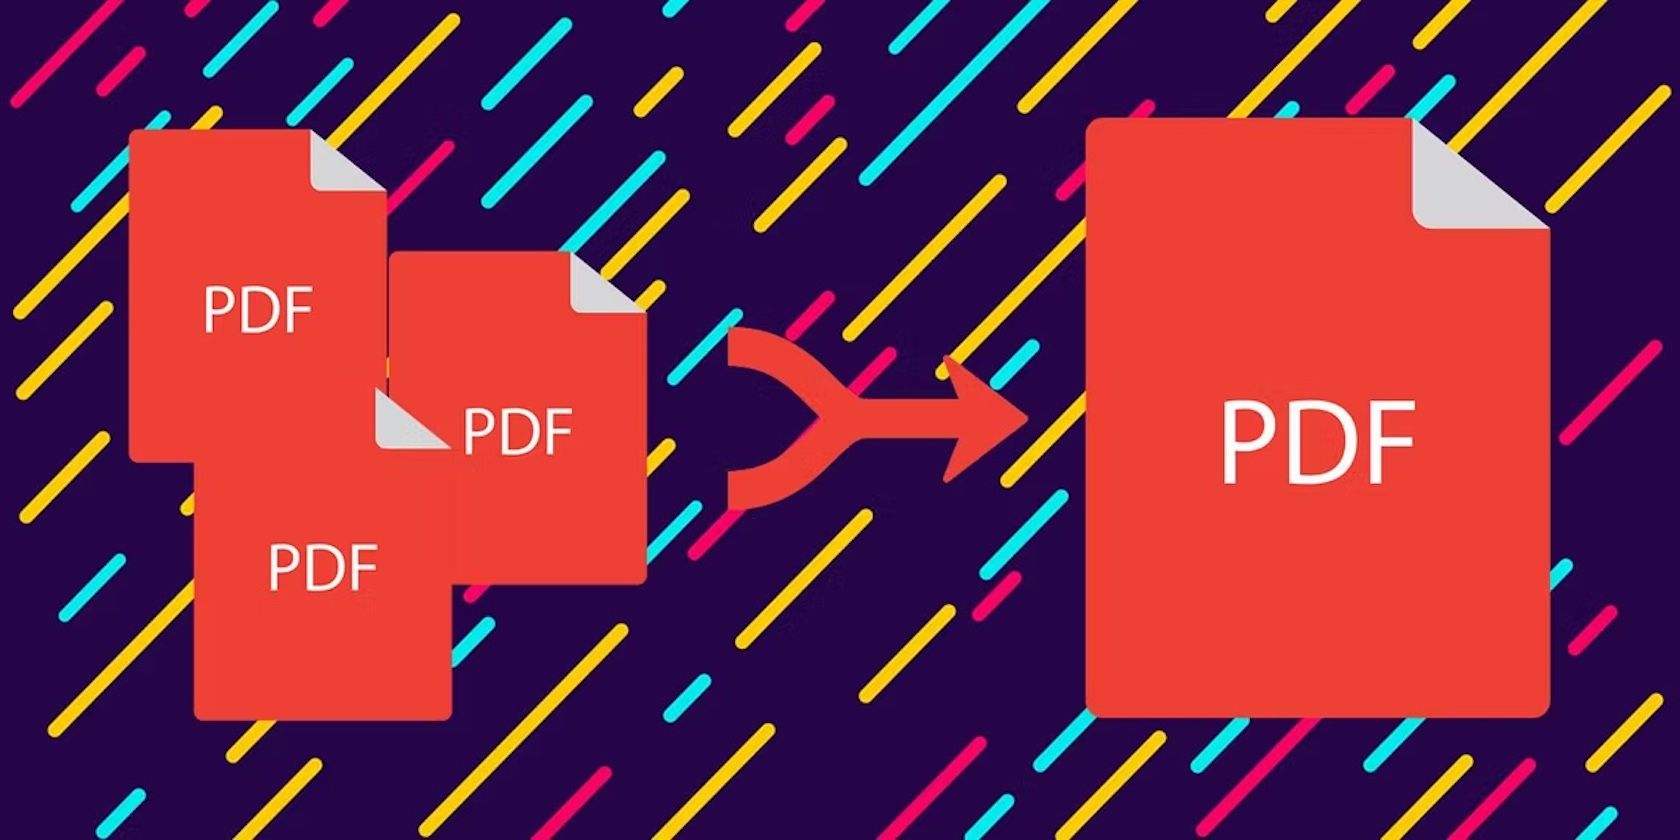 merging multiple PDF files into a single PDF document